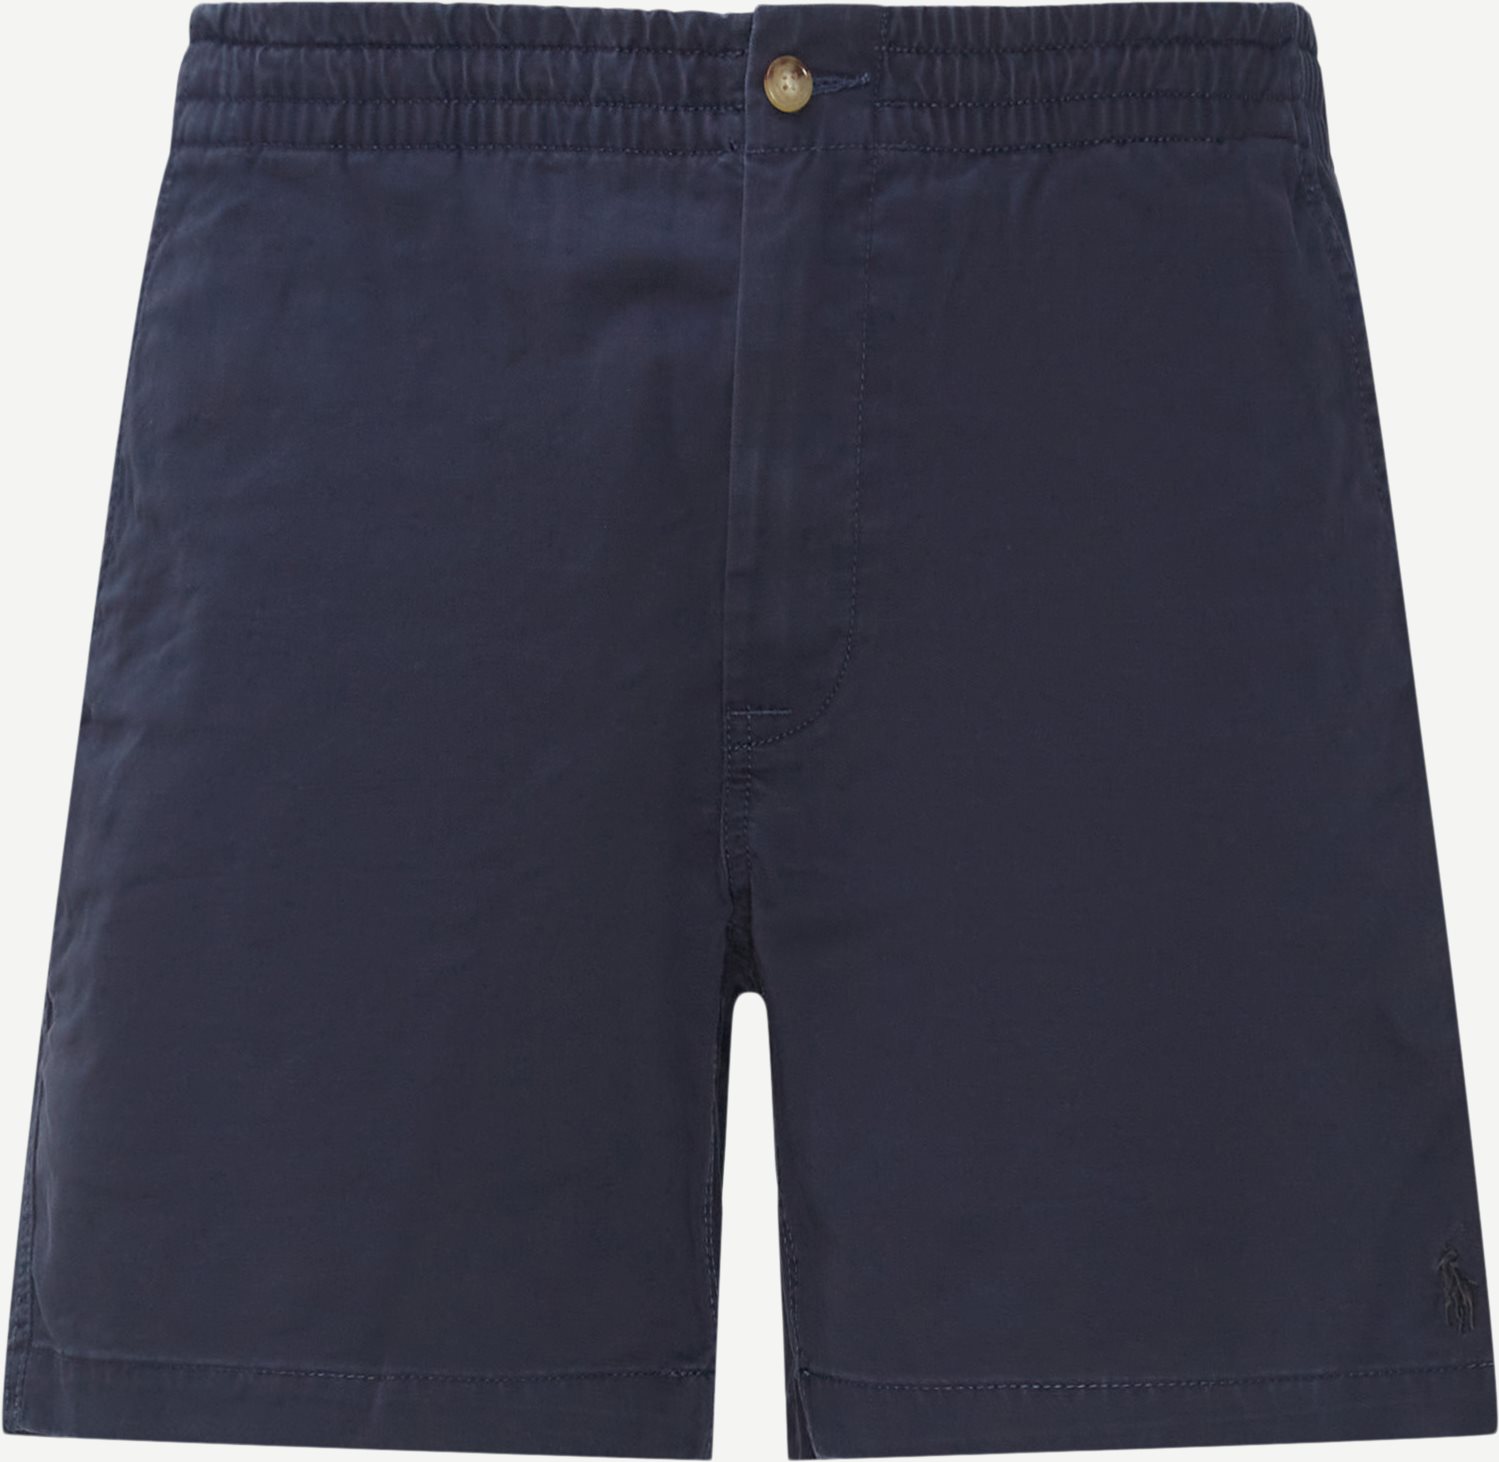 Shorts - Classic fit - Blue